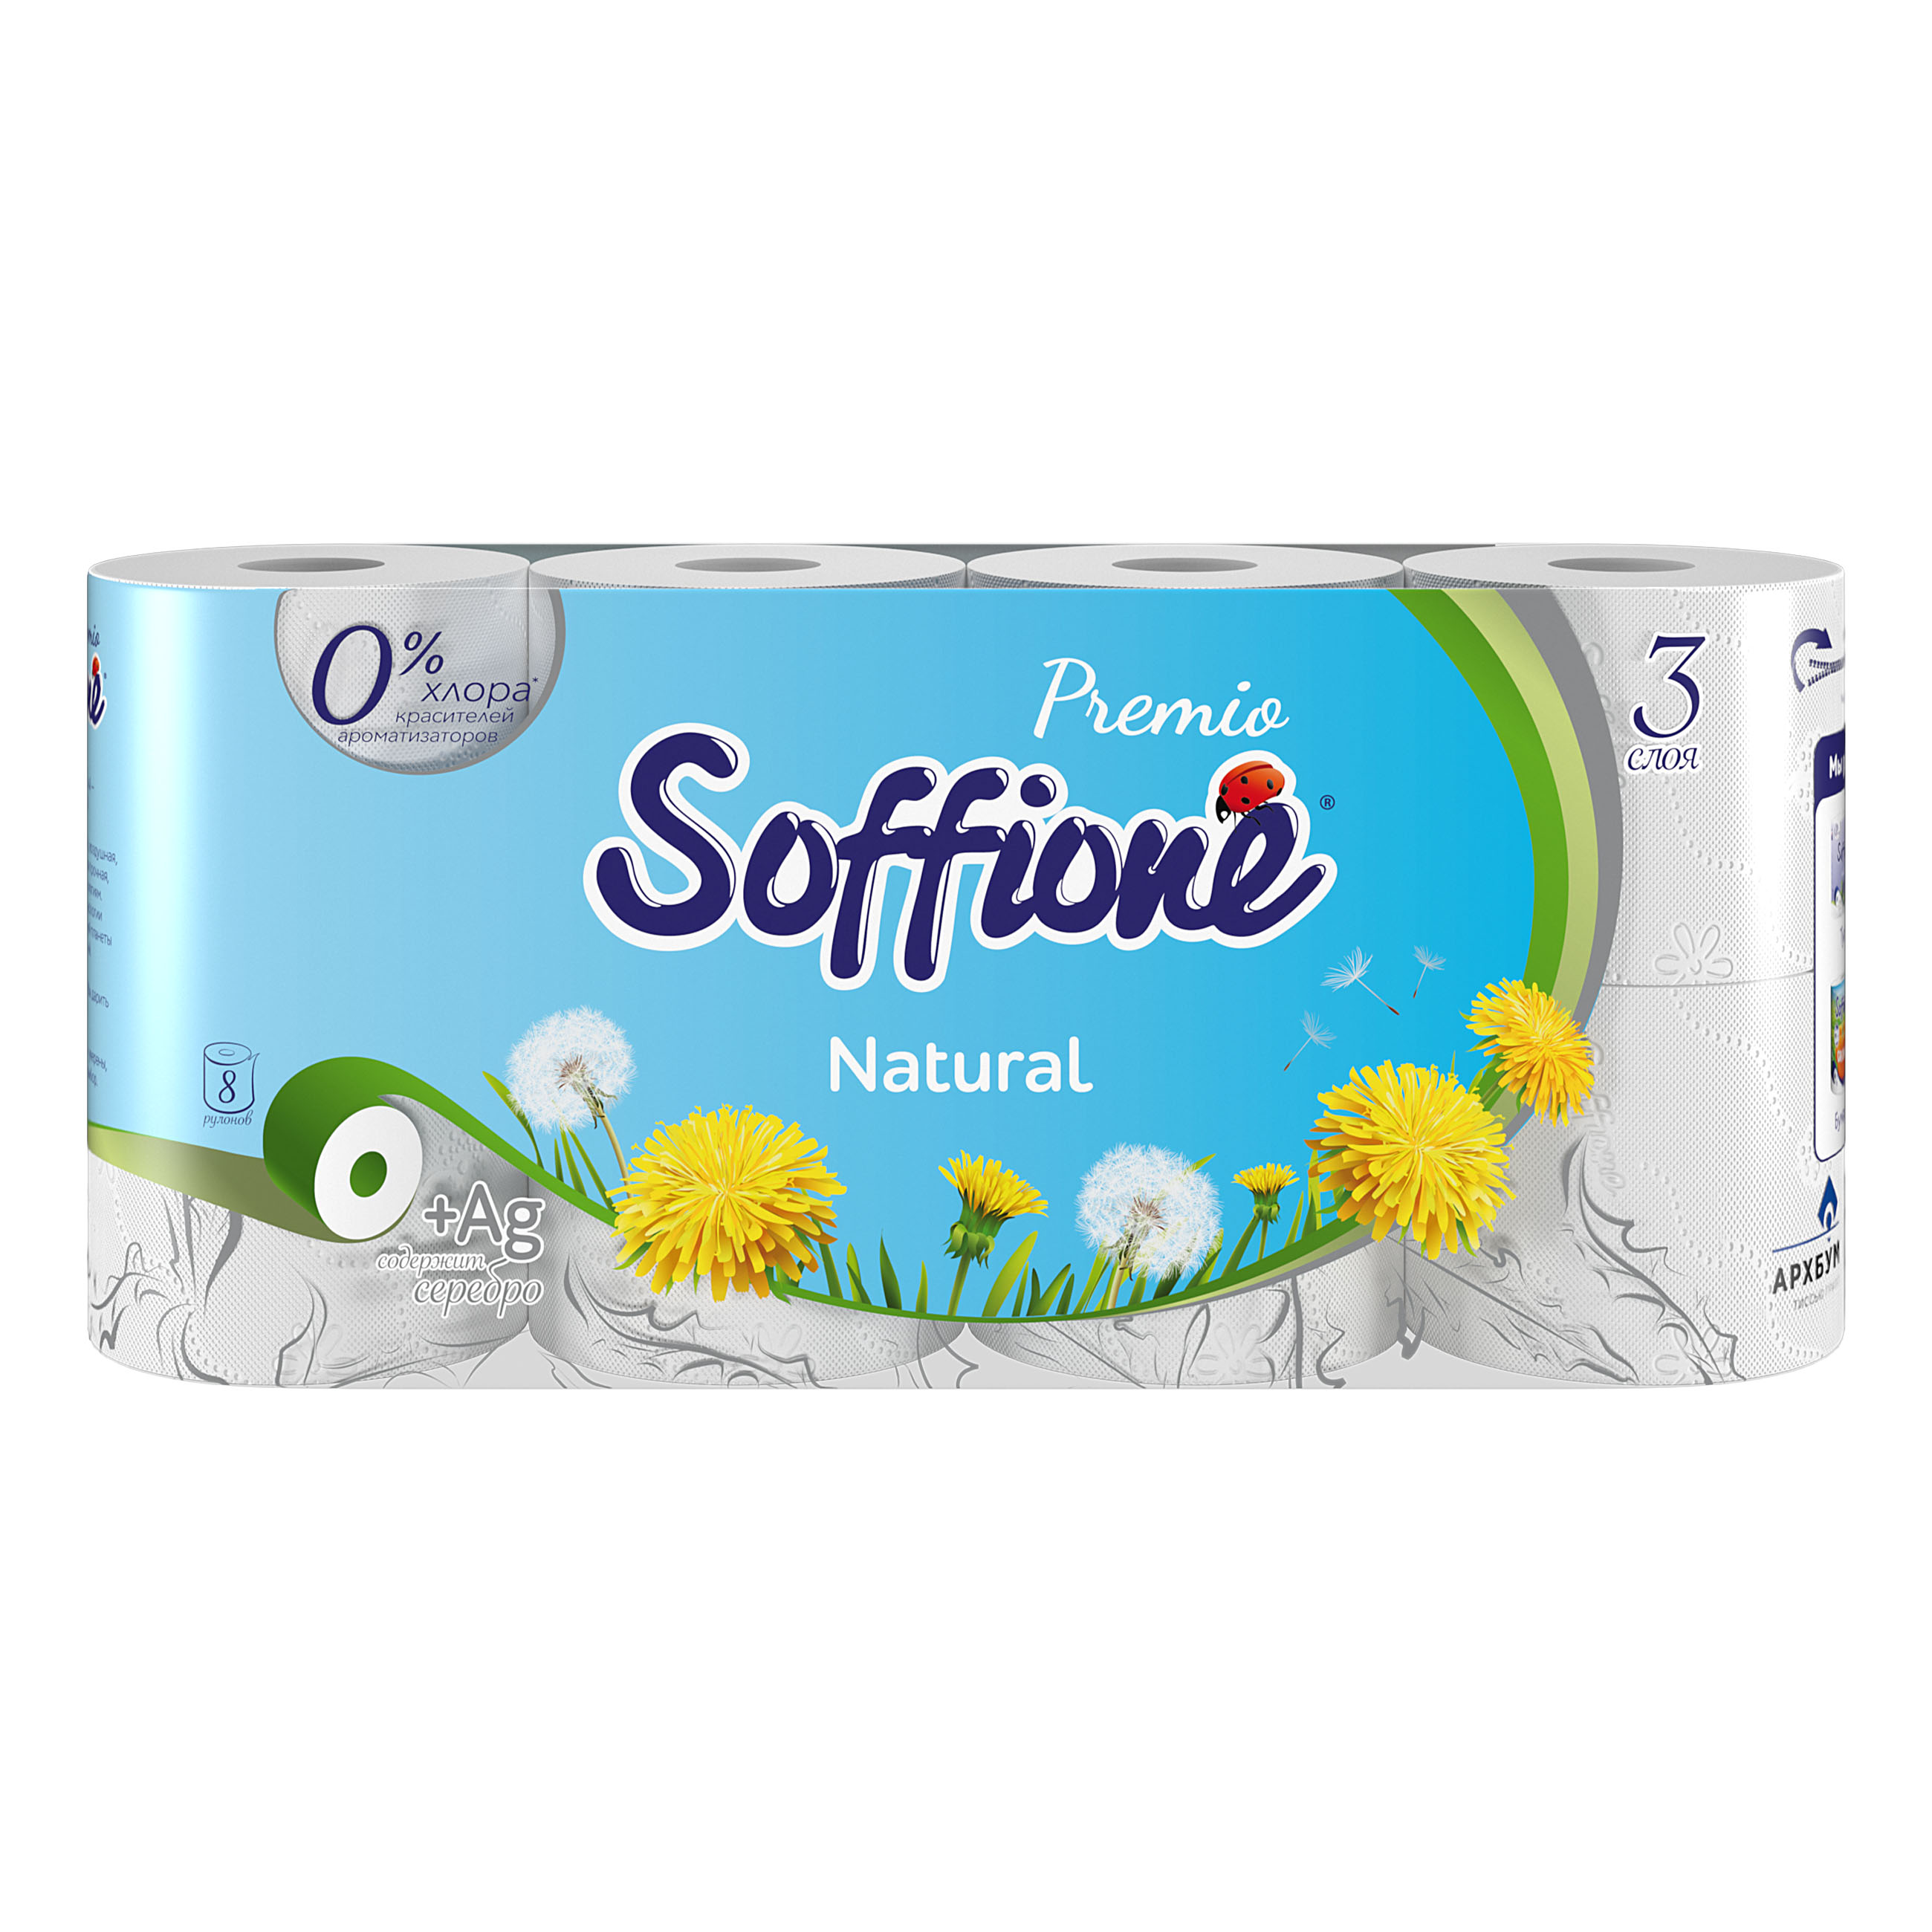 Туалетная бумага Soffione Premio Natural трехслойная, 8 рулонов